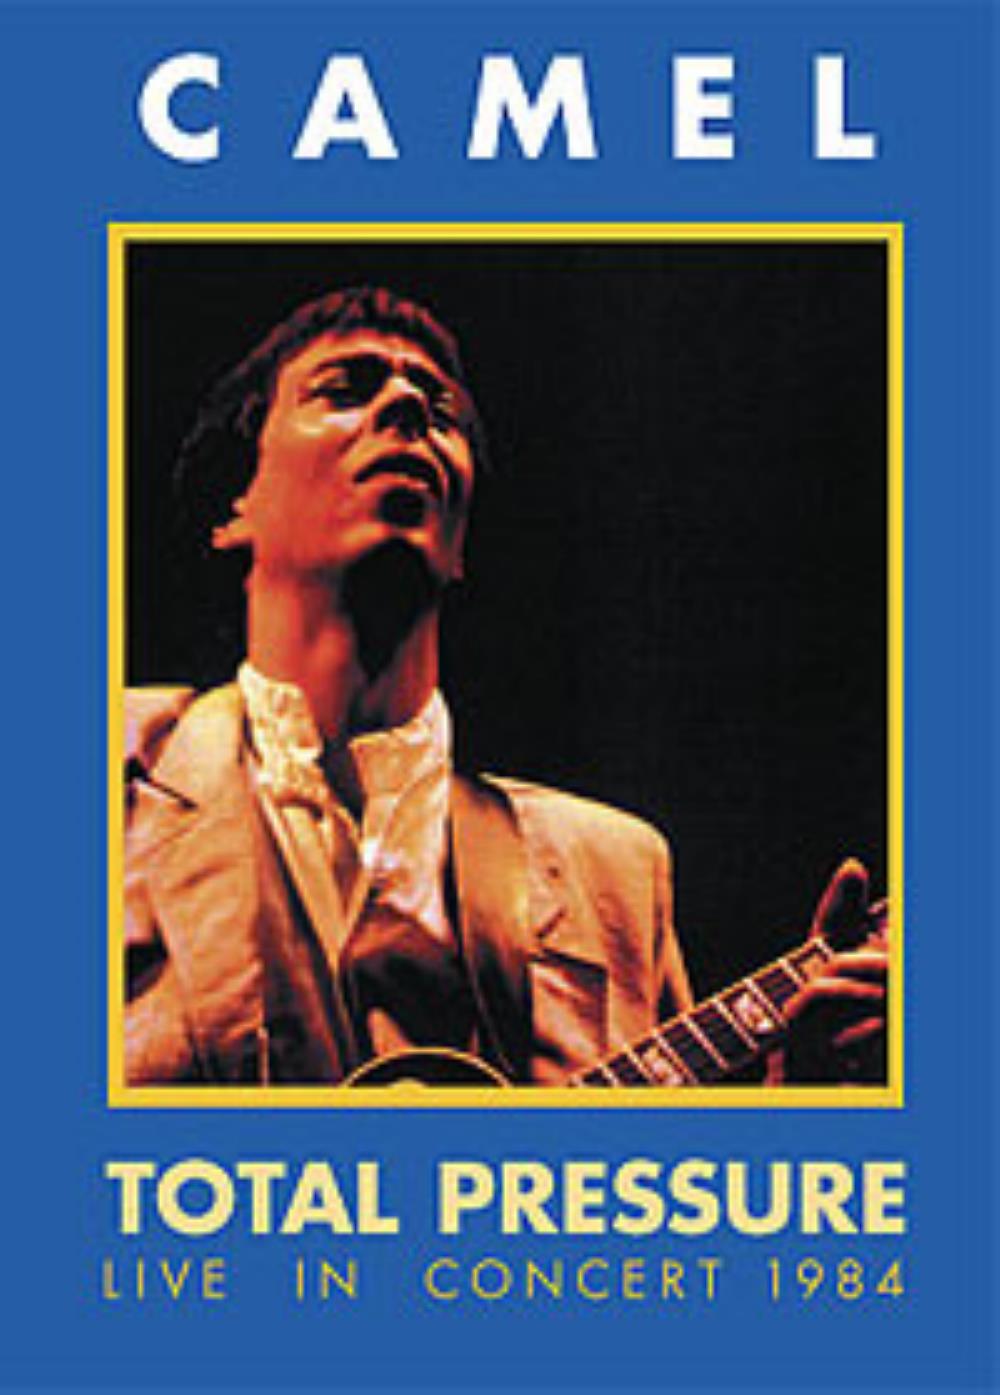 Camel Total Pressure - Live In Concert 1984 album cover